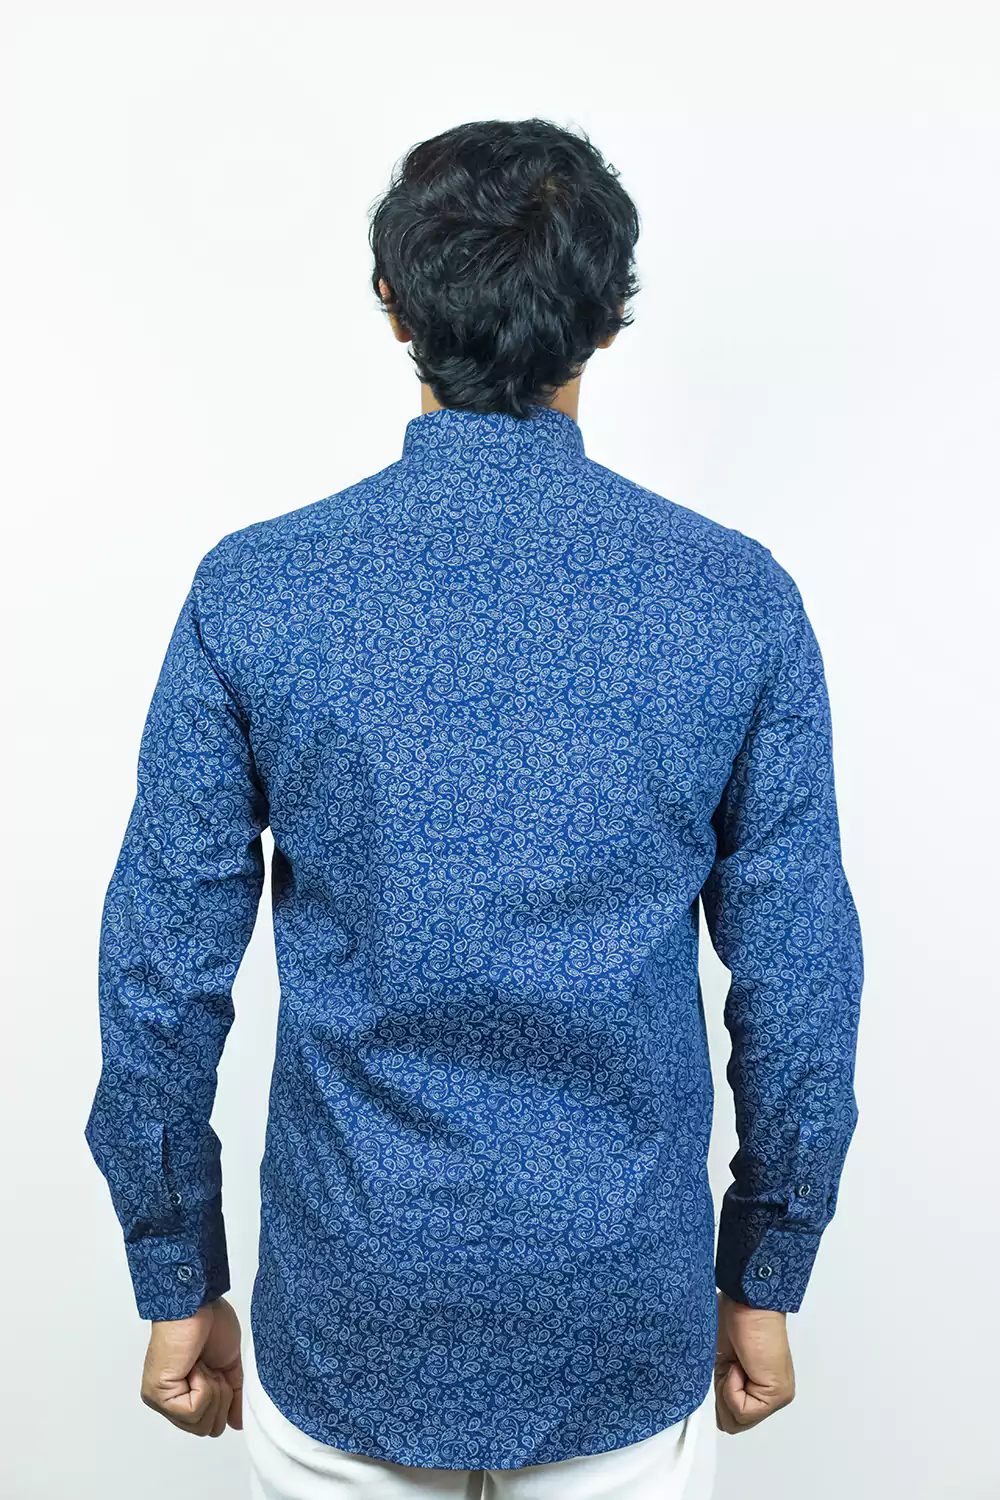 Azure Blue Paisley Printed Shirt